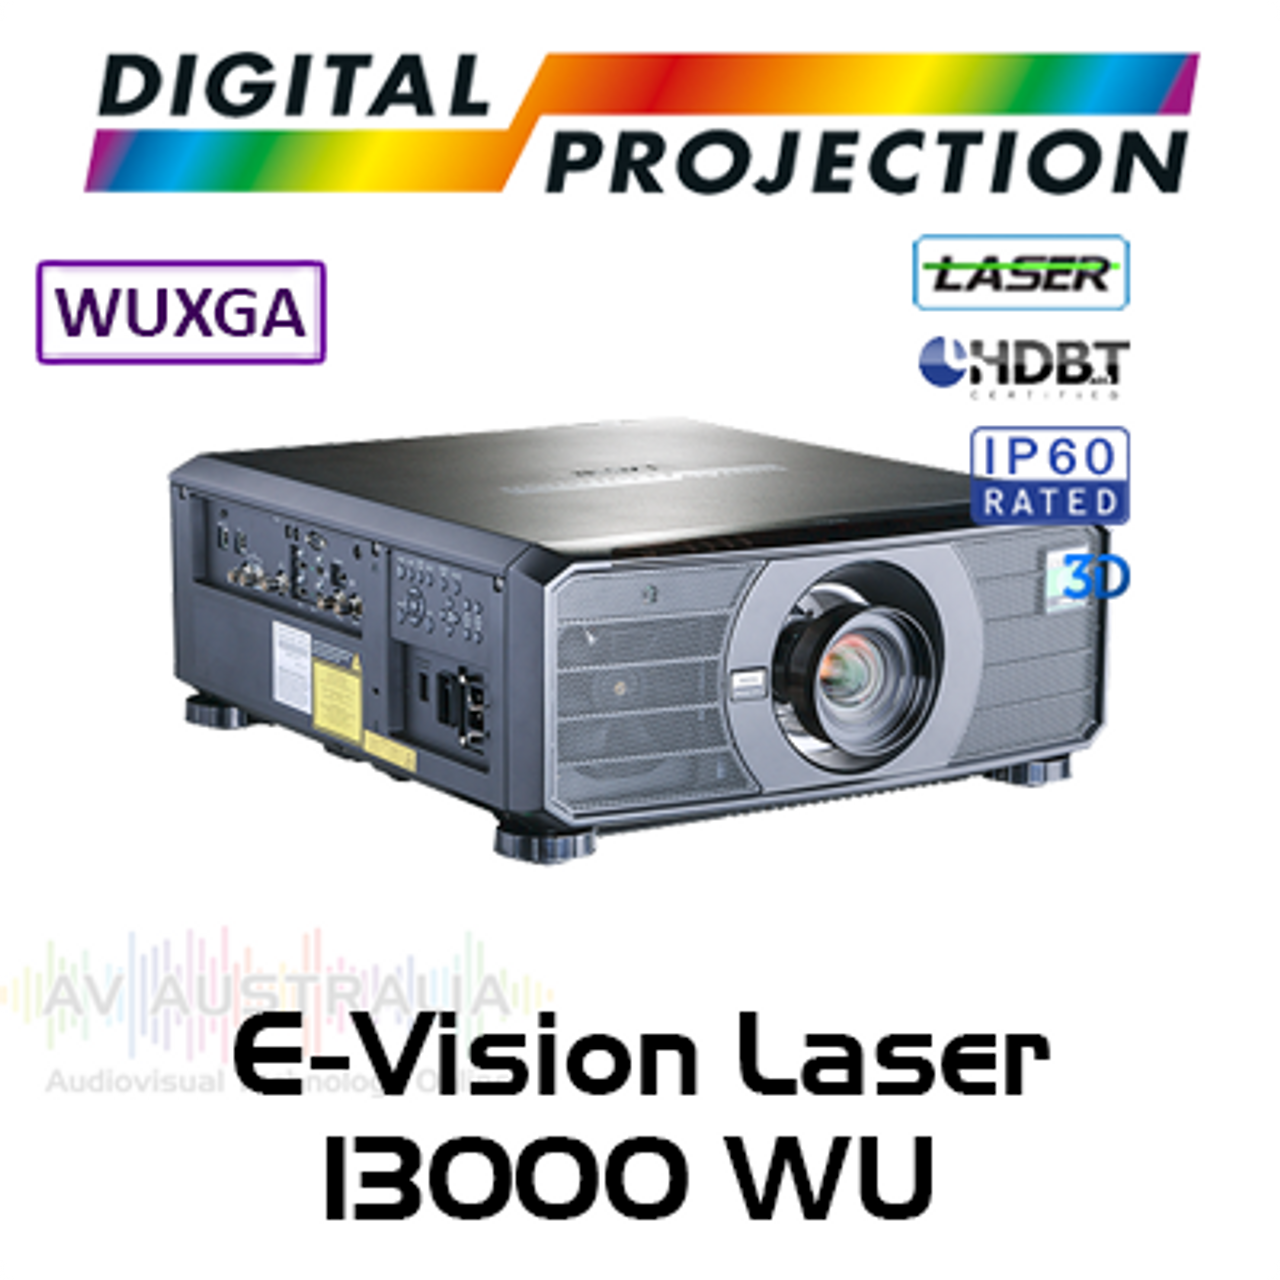 Digital Projection E-Vision Laser 13000 WU WUXGA IP60 HDBaseT 3D DLP Projector with Red Laser